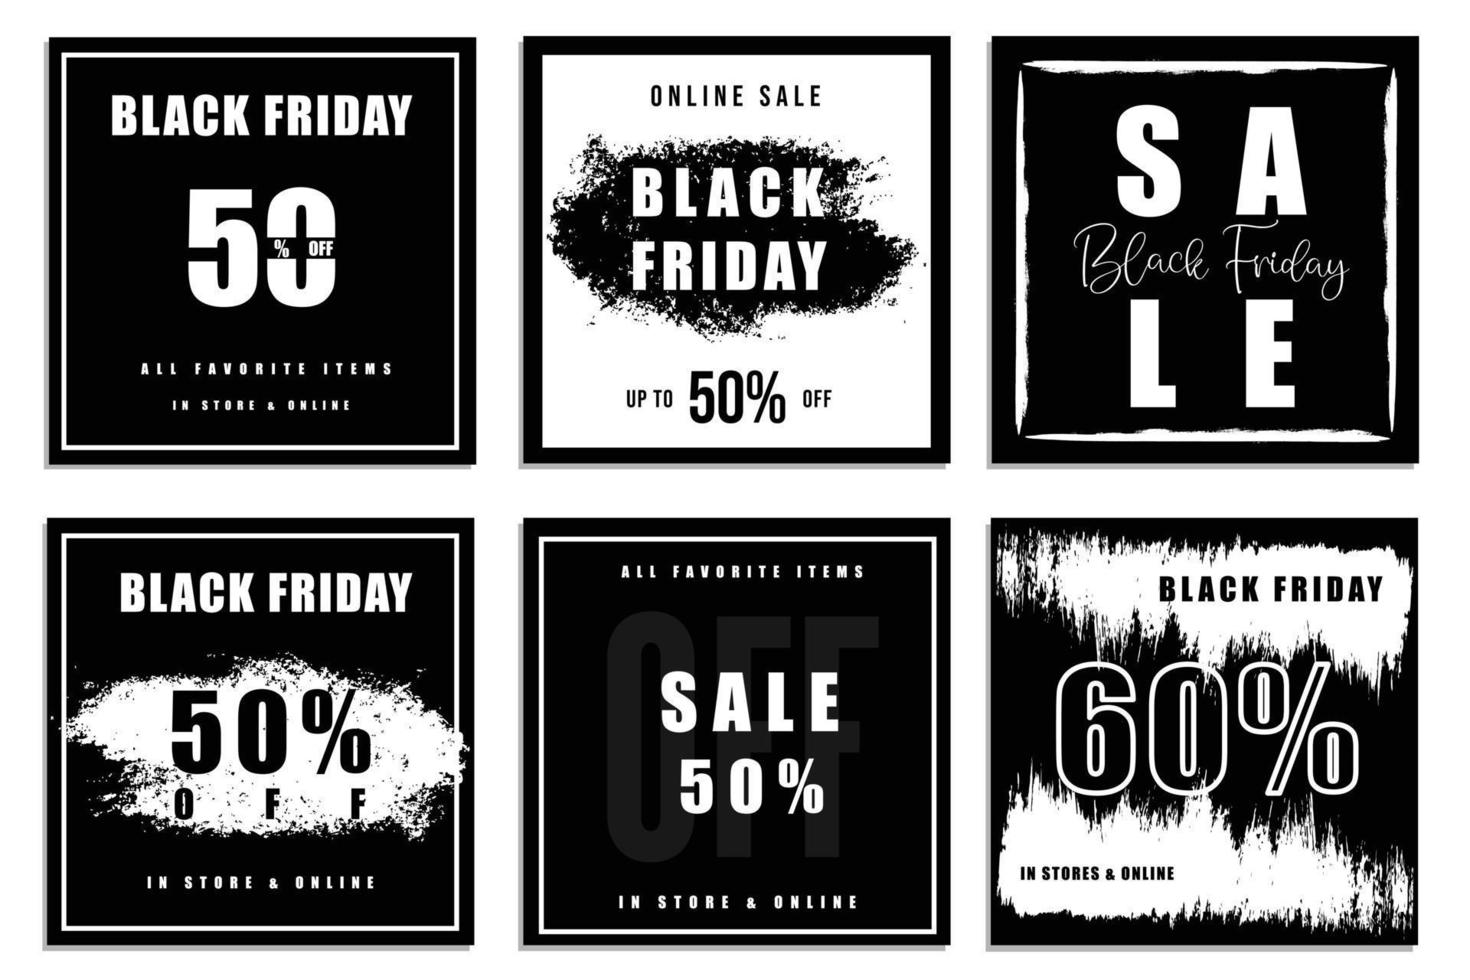 Black Friday promotion web banner for social media template. Black Friday Sale banner for social media. vector